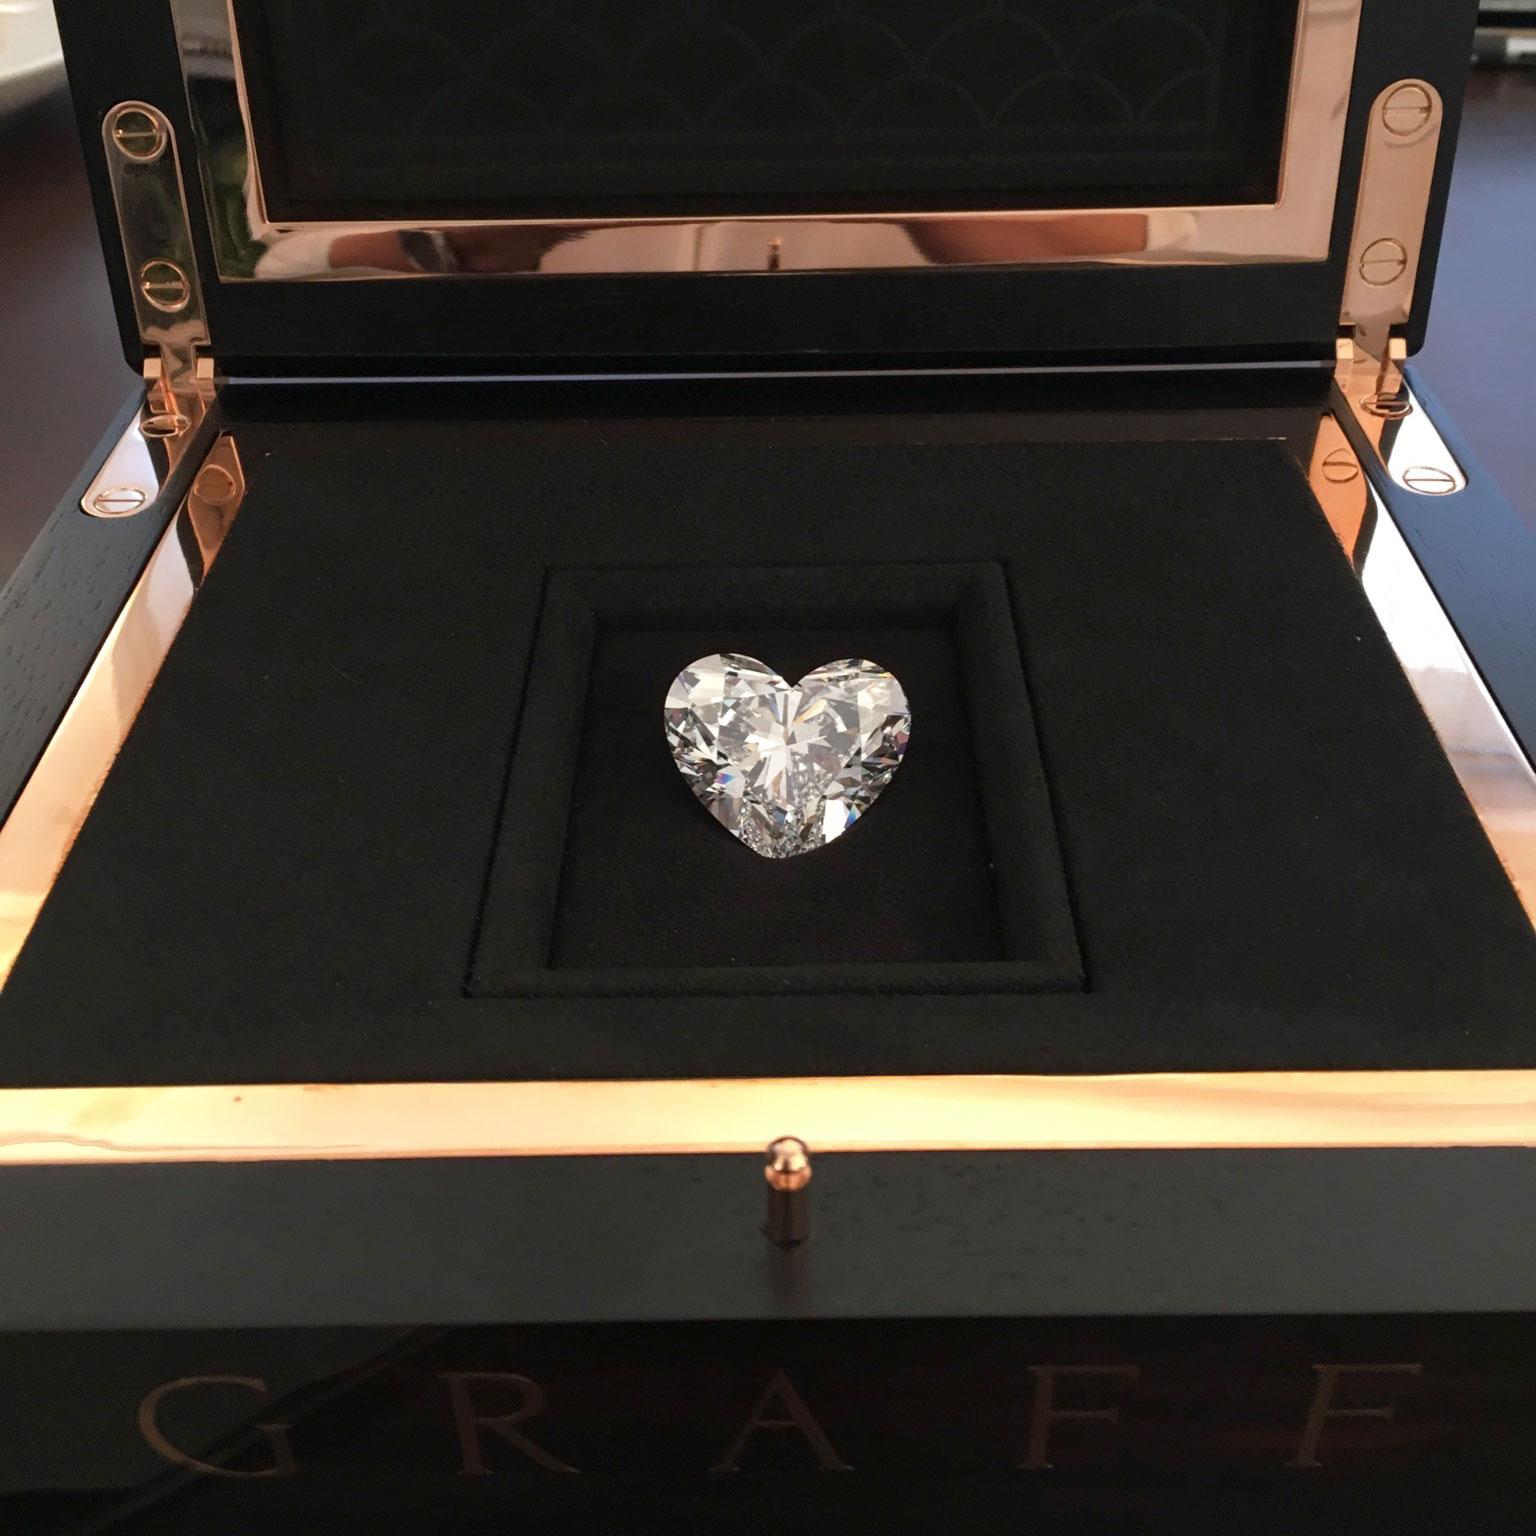 The record breaking Graff Venus heart shape diamond